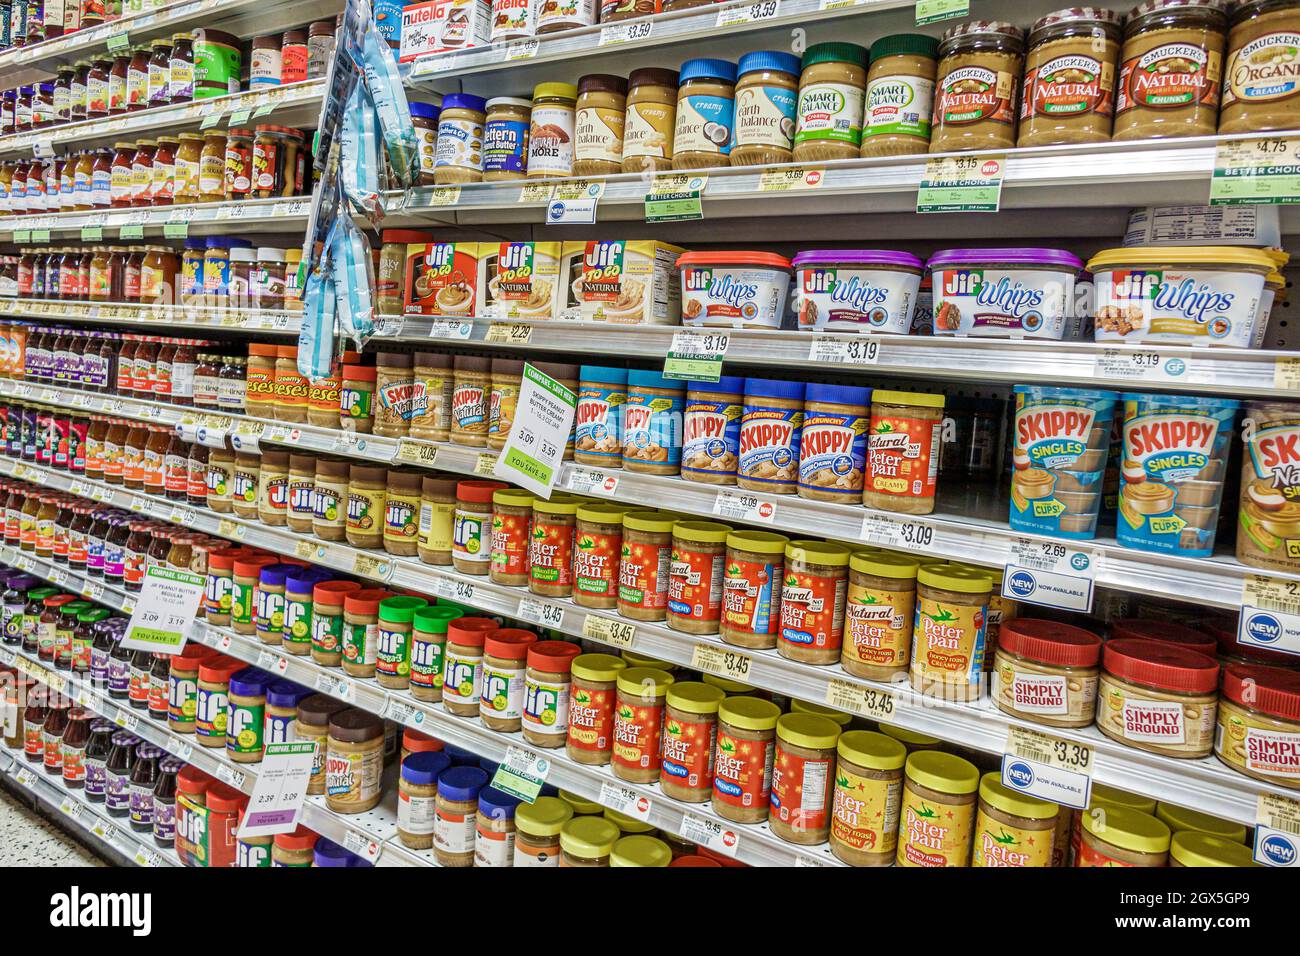 Ft. Fort Lauderdale Florida,Publix,supermarket grocery store,display sale shelf shelves jars peanut butter Skippy Peter Pan,competing brands Stock Photo